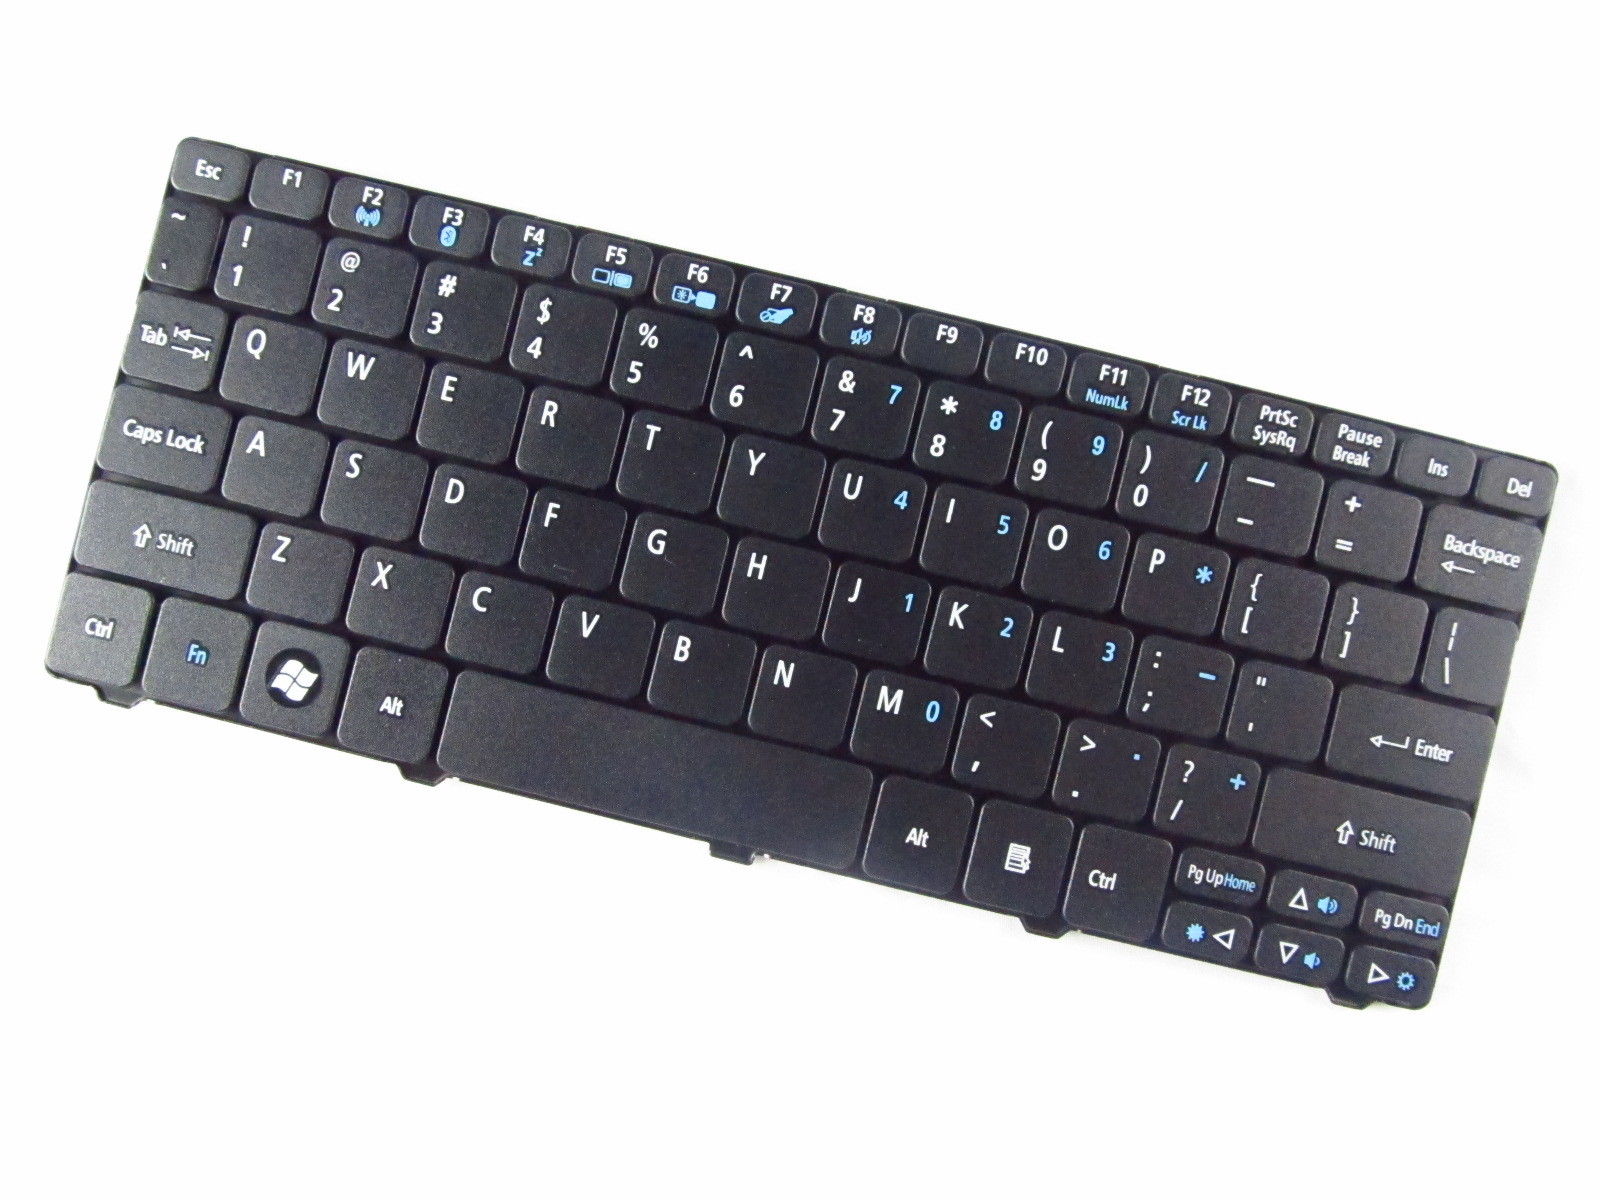 Samsung Laptop Keyboard Repair/replacement in chennai